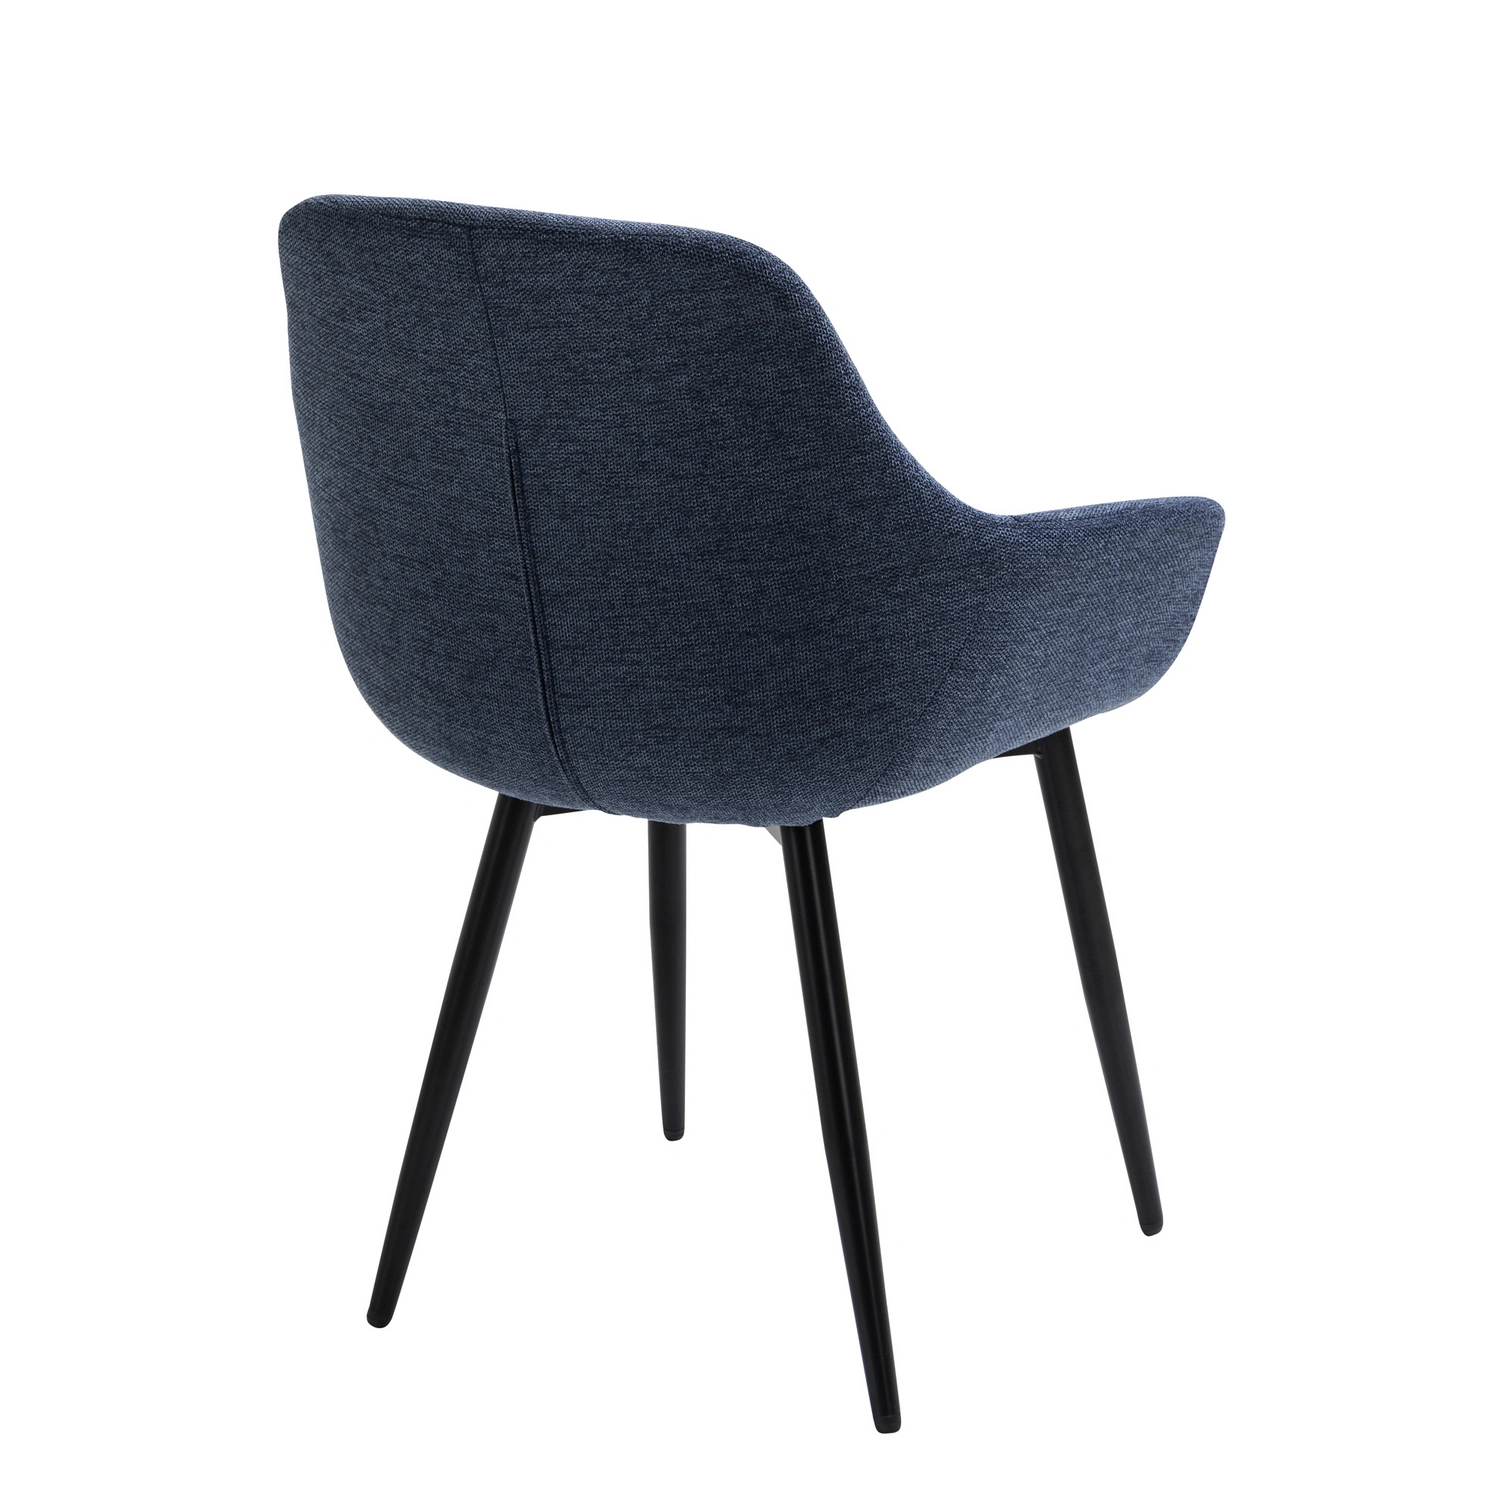 SalesFever Stuhl, Höhe: 86 cm, dunkelblau/schwarz, 2 stk